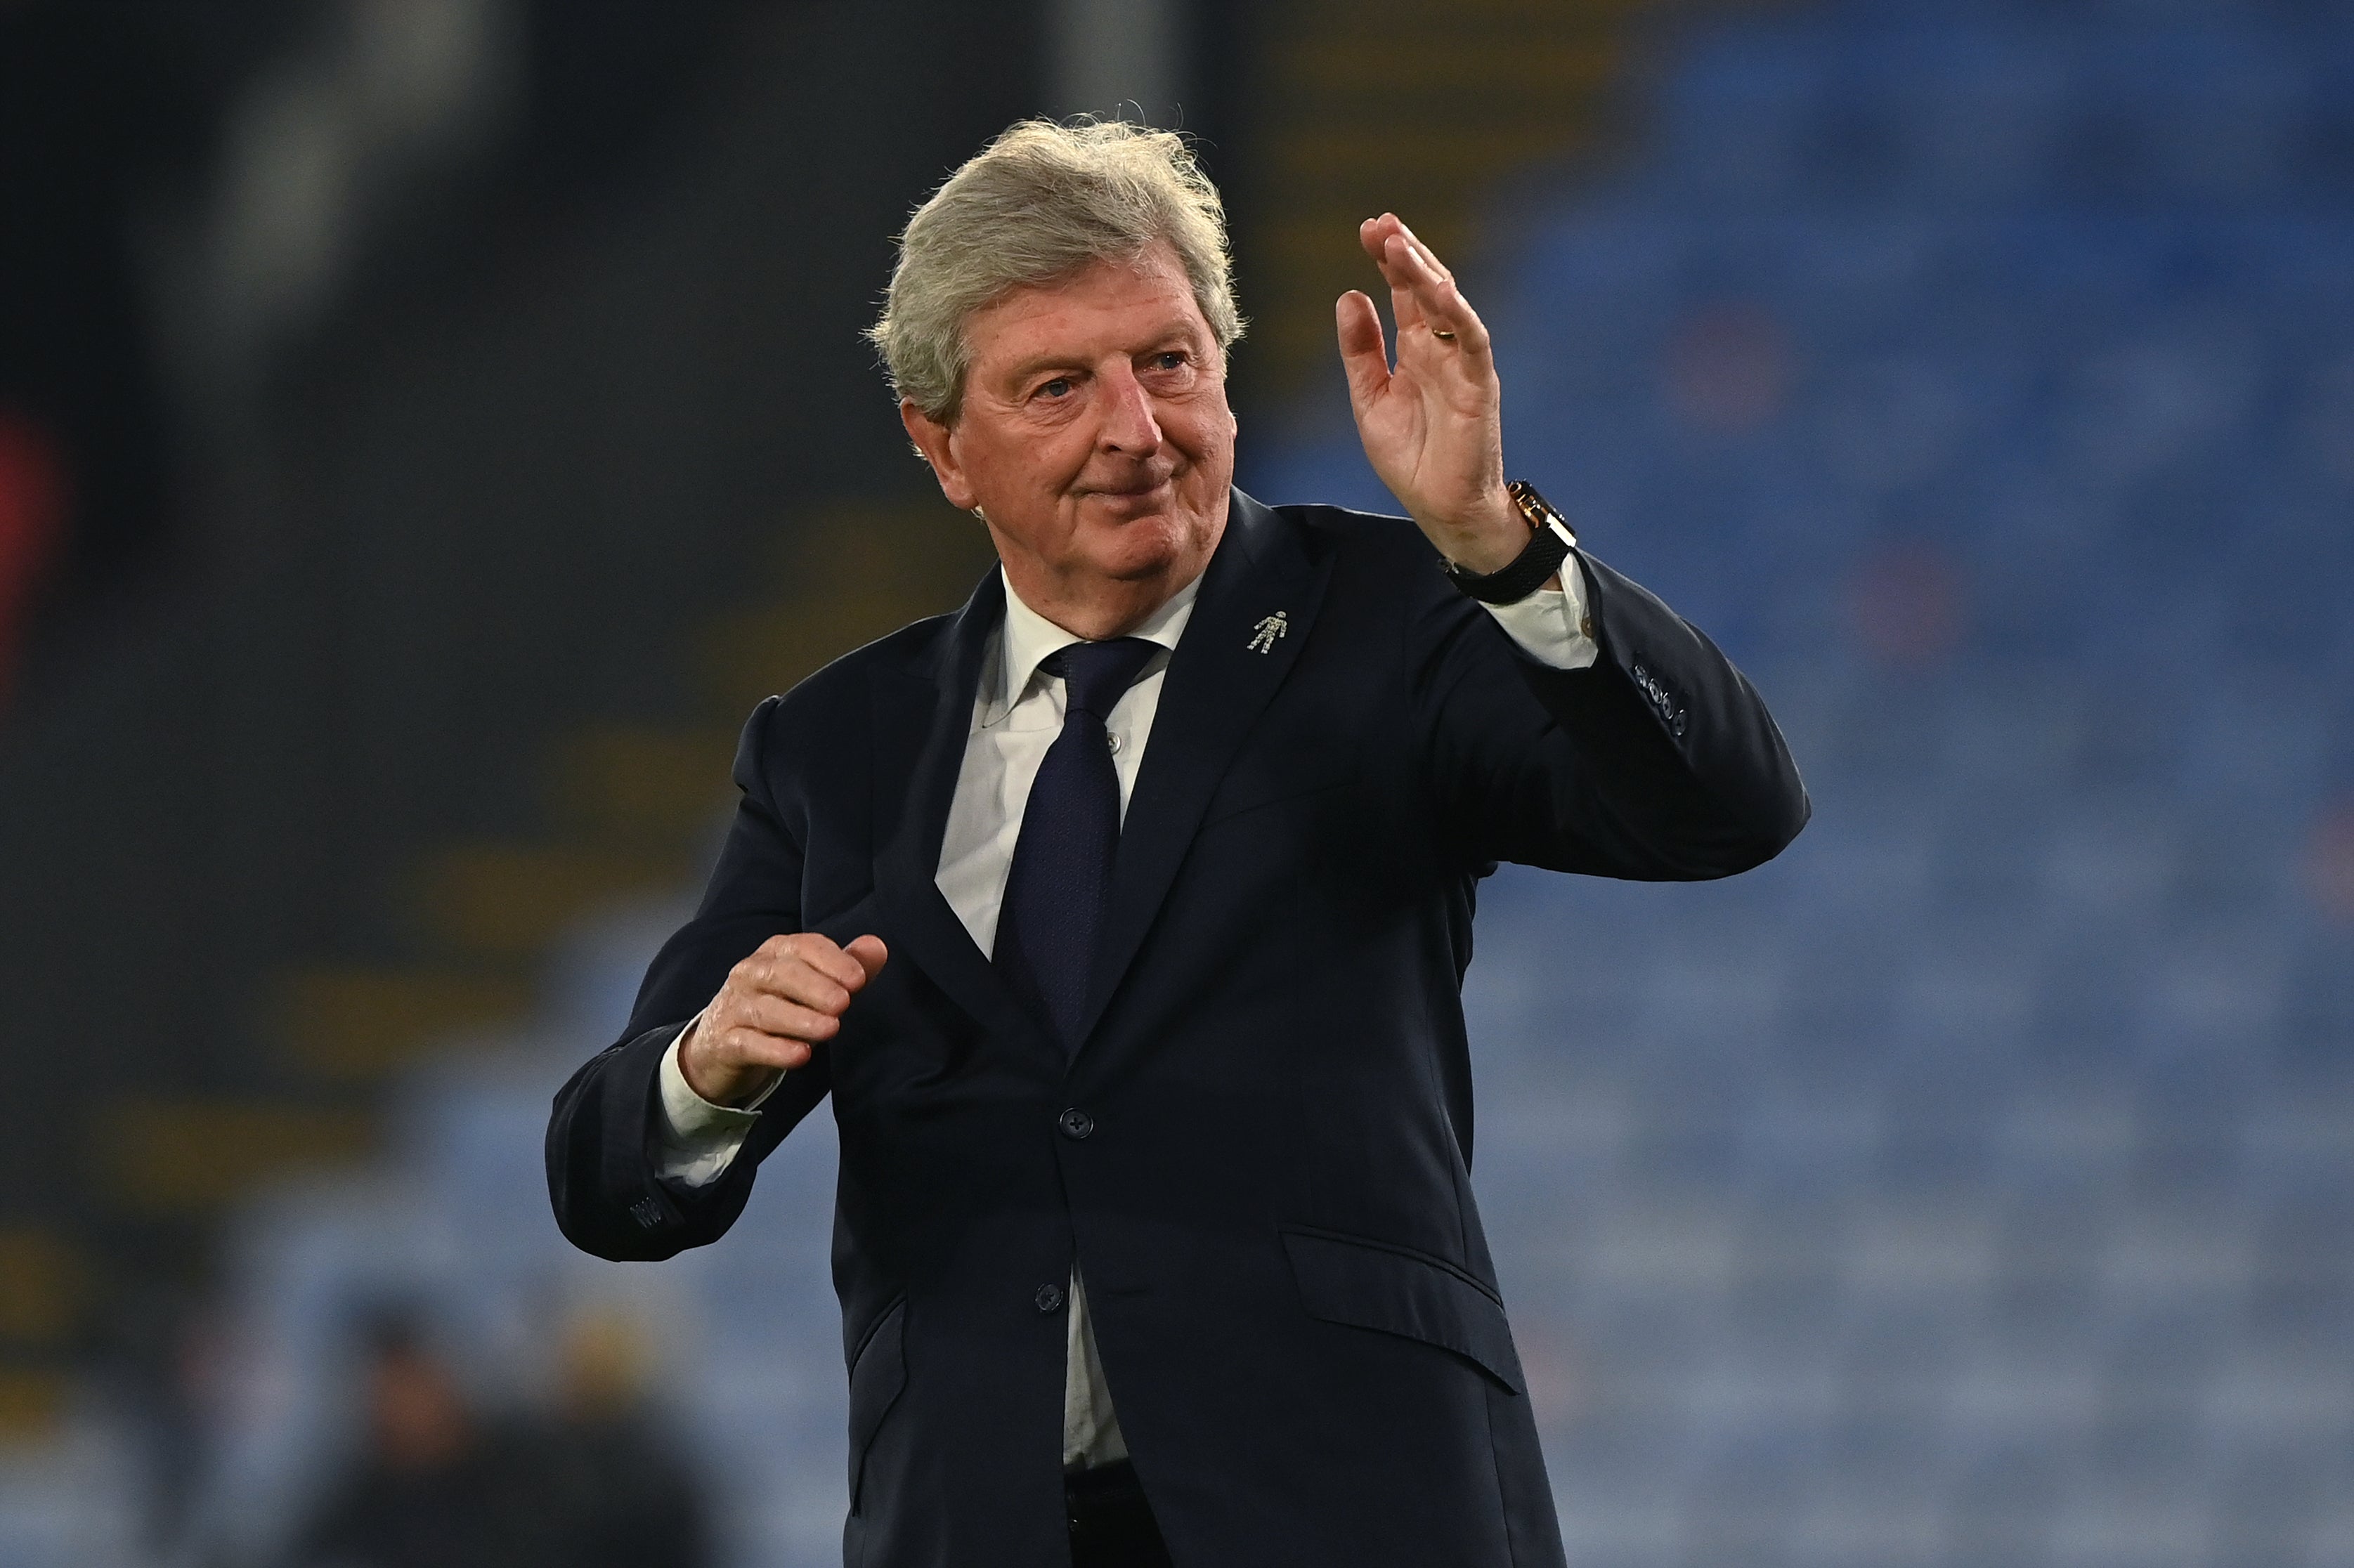 Roy Hodgson has returned to management at Watford